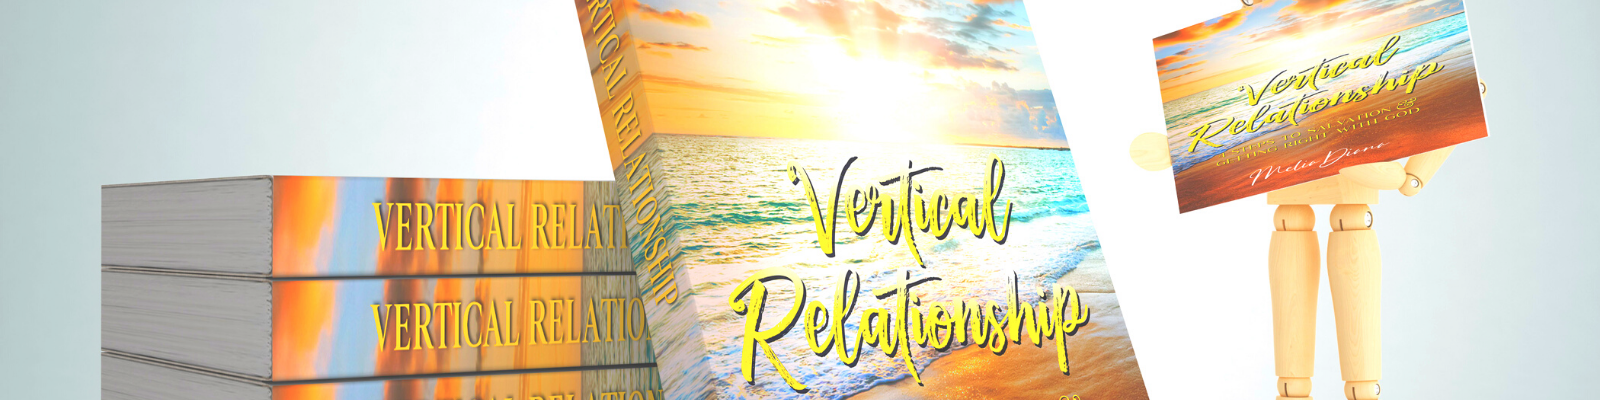 The Vertical Relationship Show: Relationship Goals, Prayer, Biblical Counseling, Dating Advice, Christian Marriage & Healing Trauma